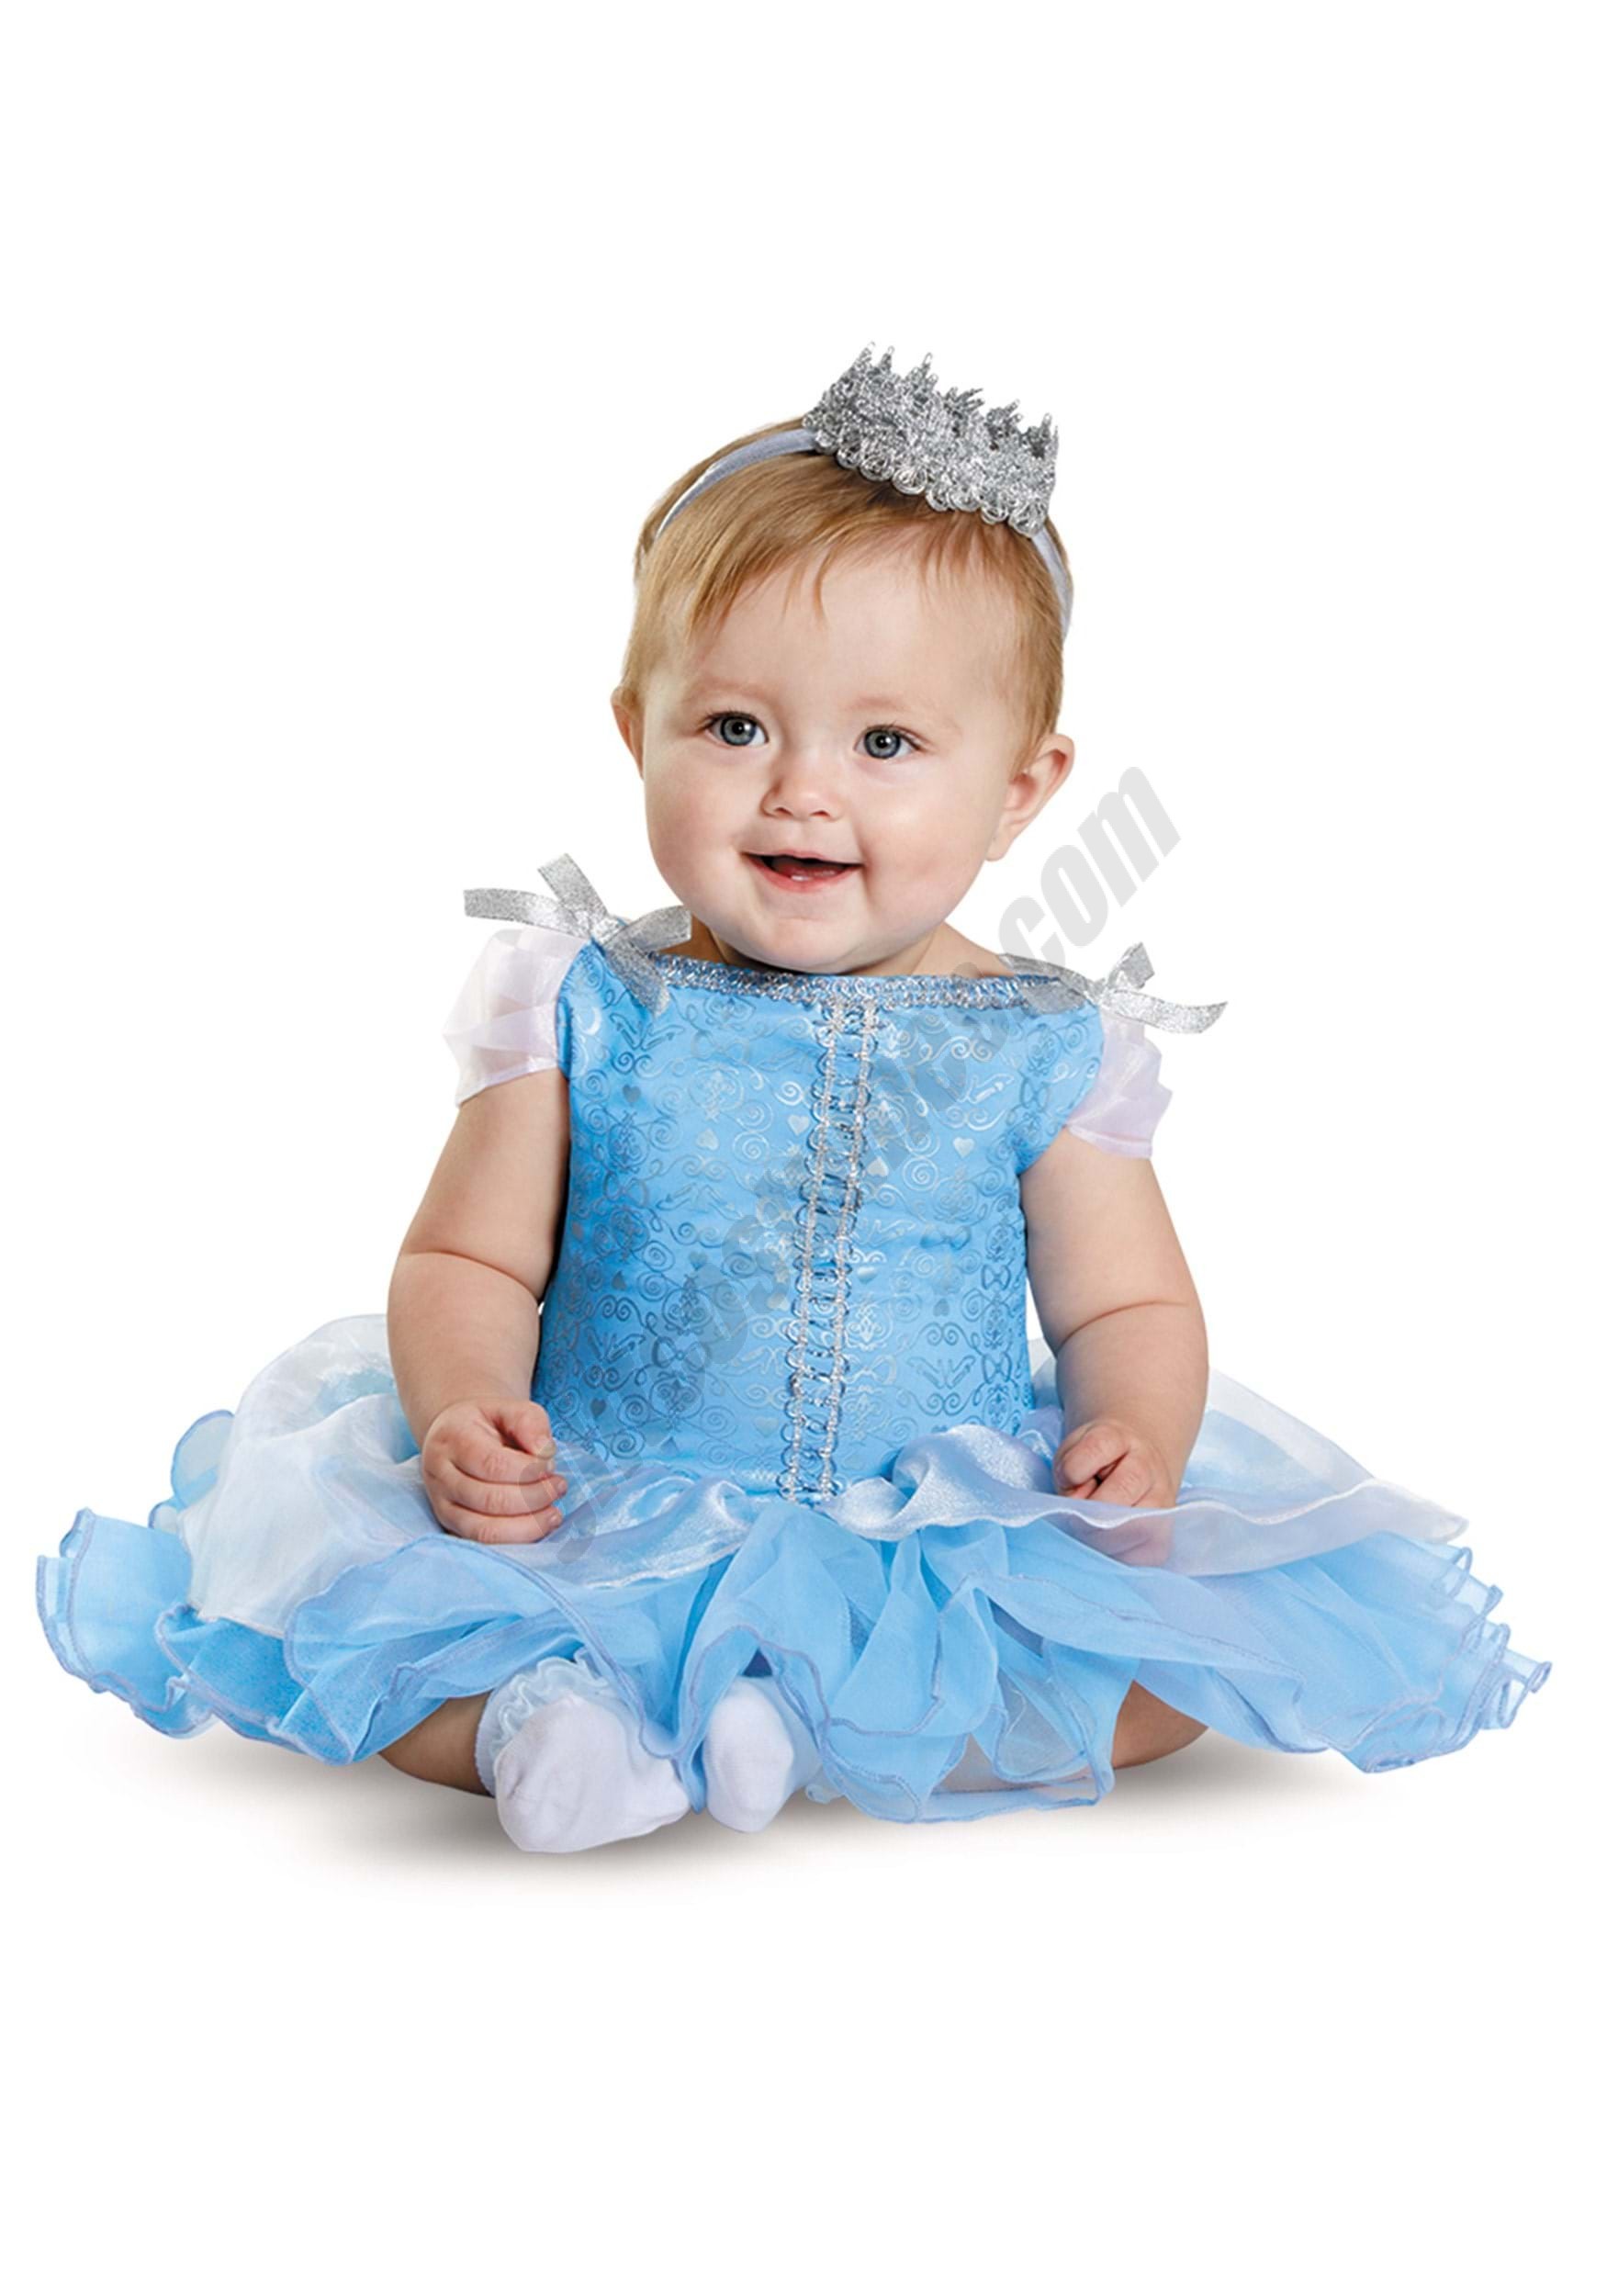 Cinderella Prestige Infant Costume Promotions - Cinderella Prestige Infant Costume Promotions